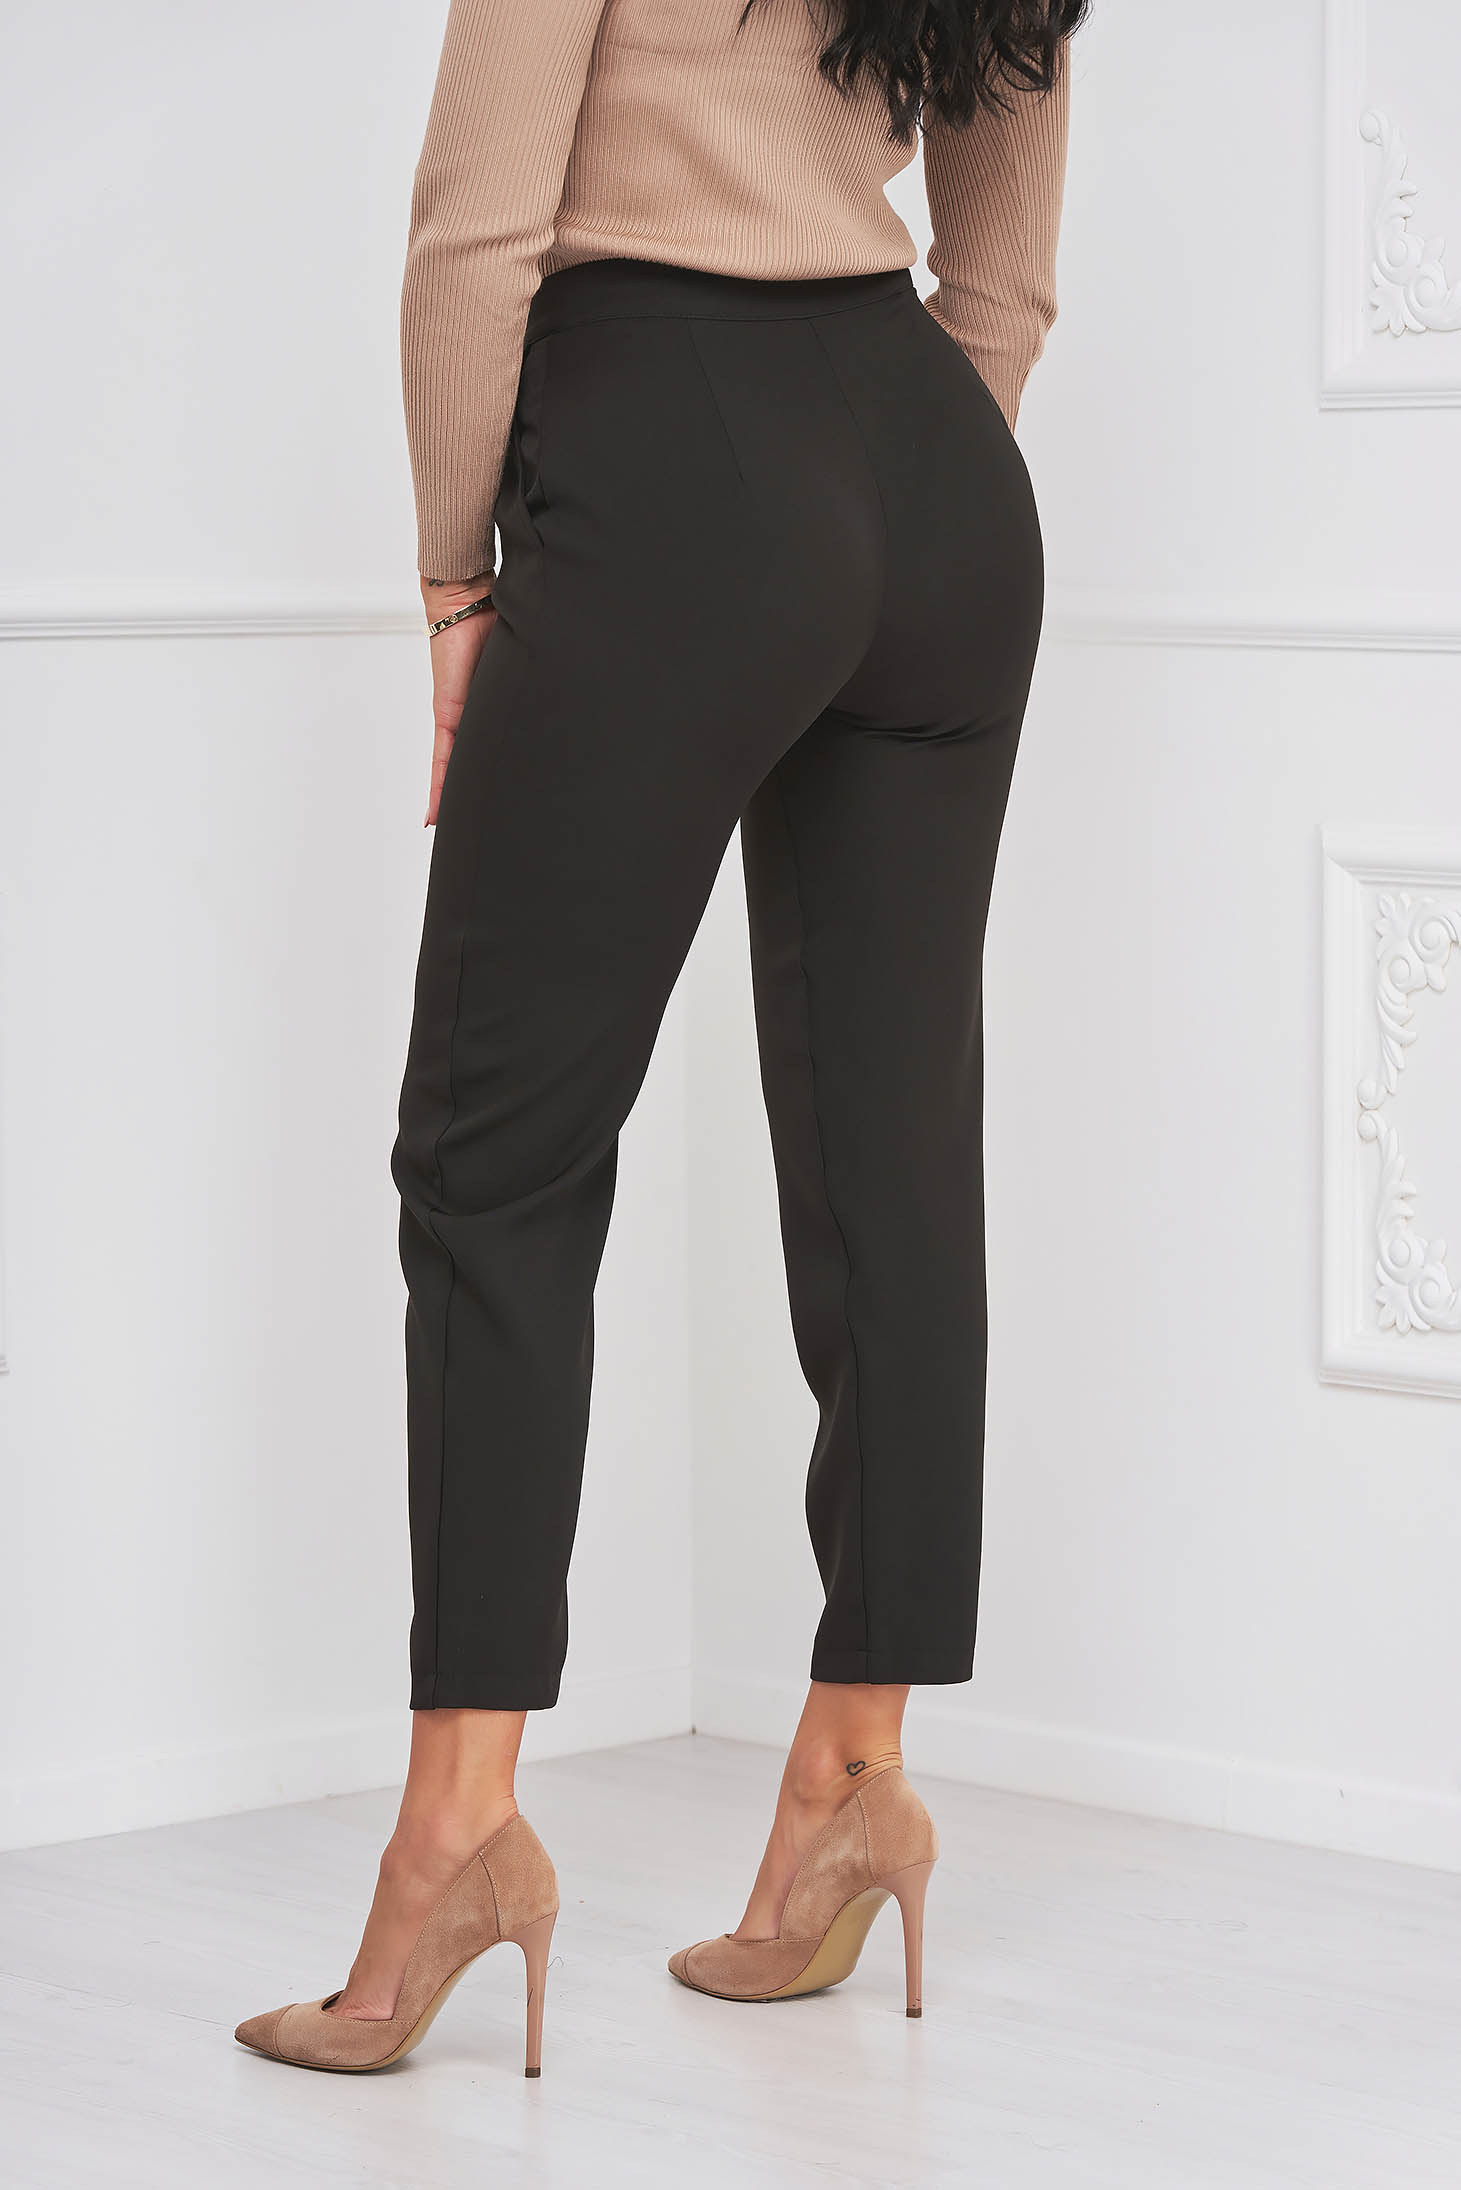 Pantaloni din stofa elastica negru conici cu talie normala si buzunare laterale - StarShinerS 2 - StarShinerS.ro